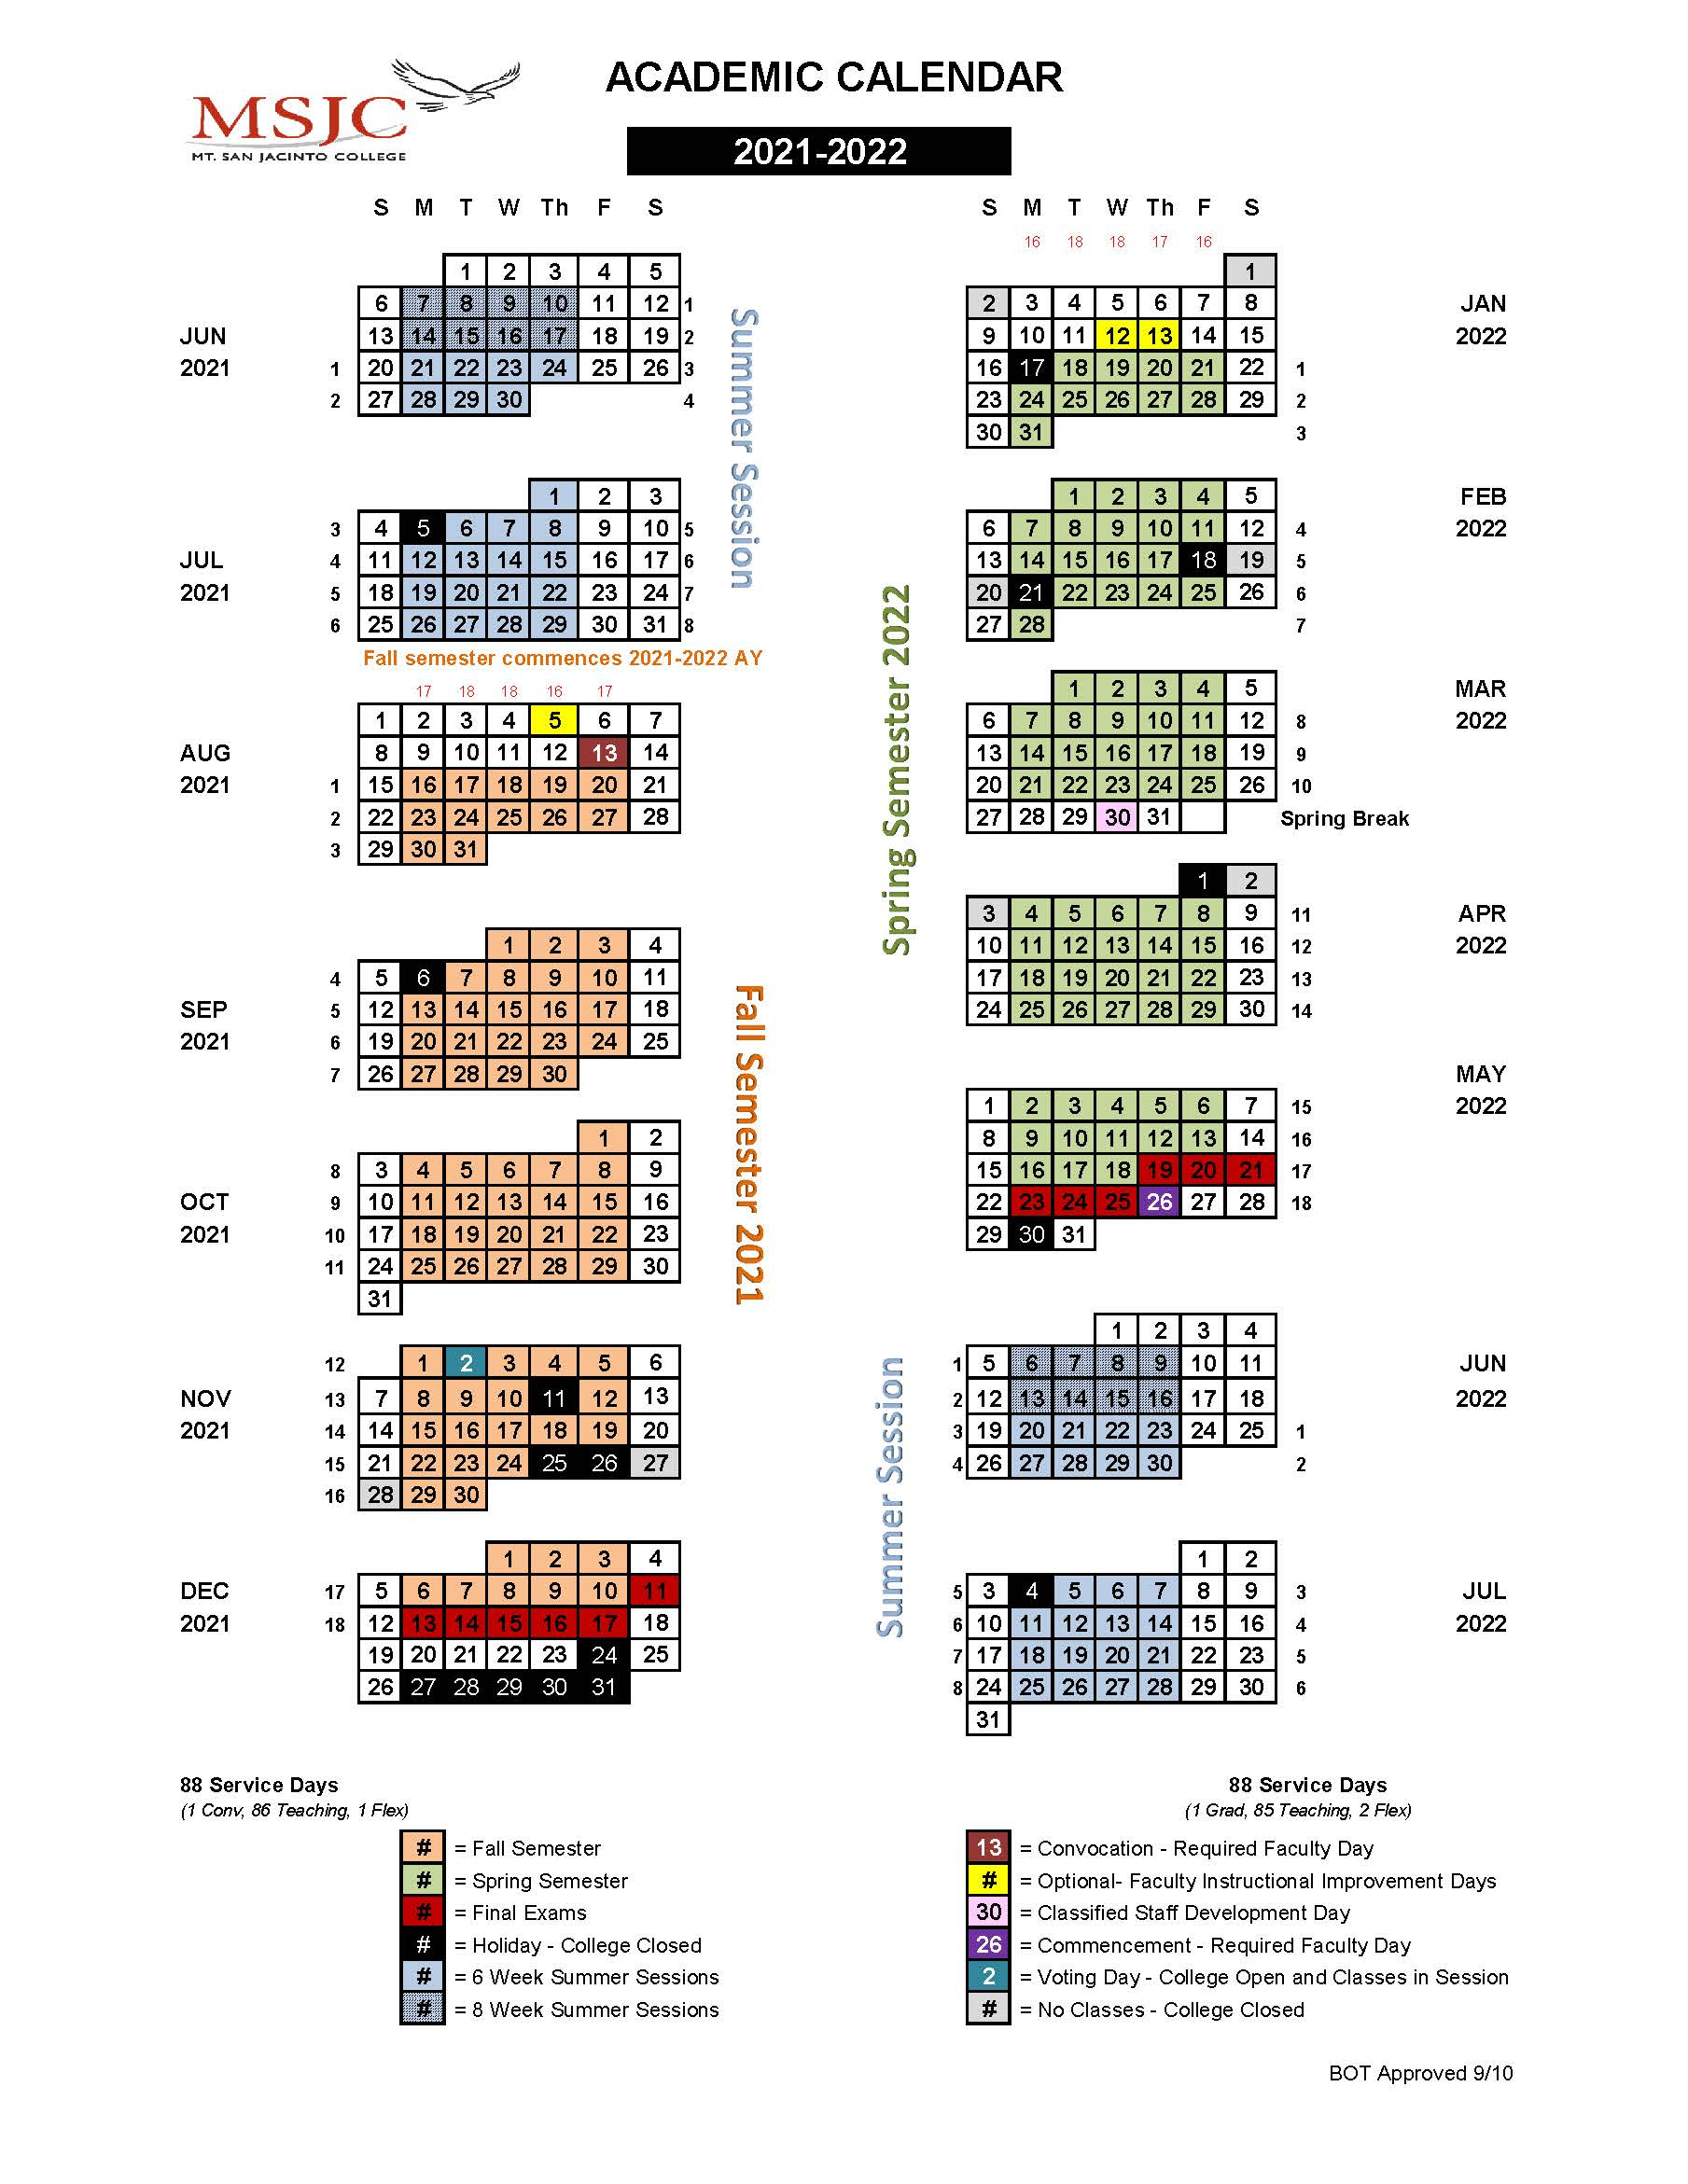 Loyola University Chicago Academic Calendar Spring 2023